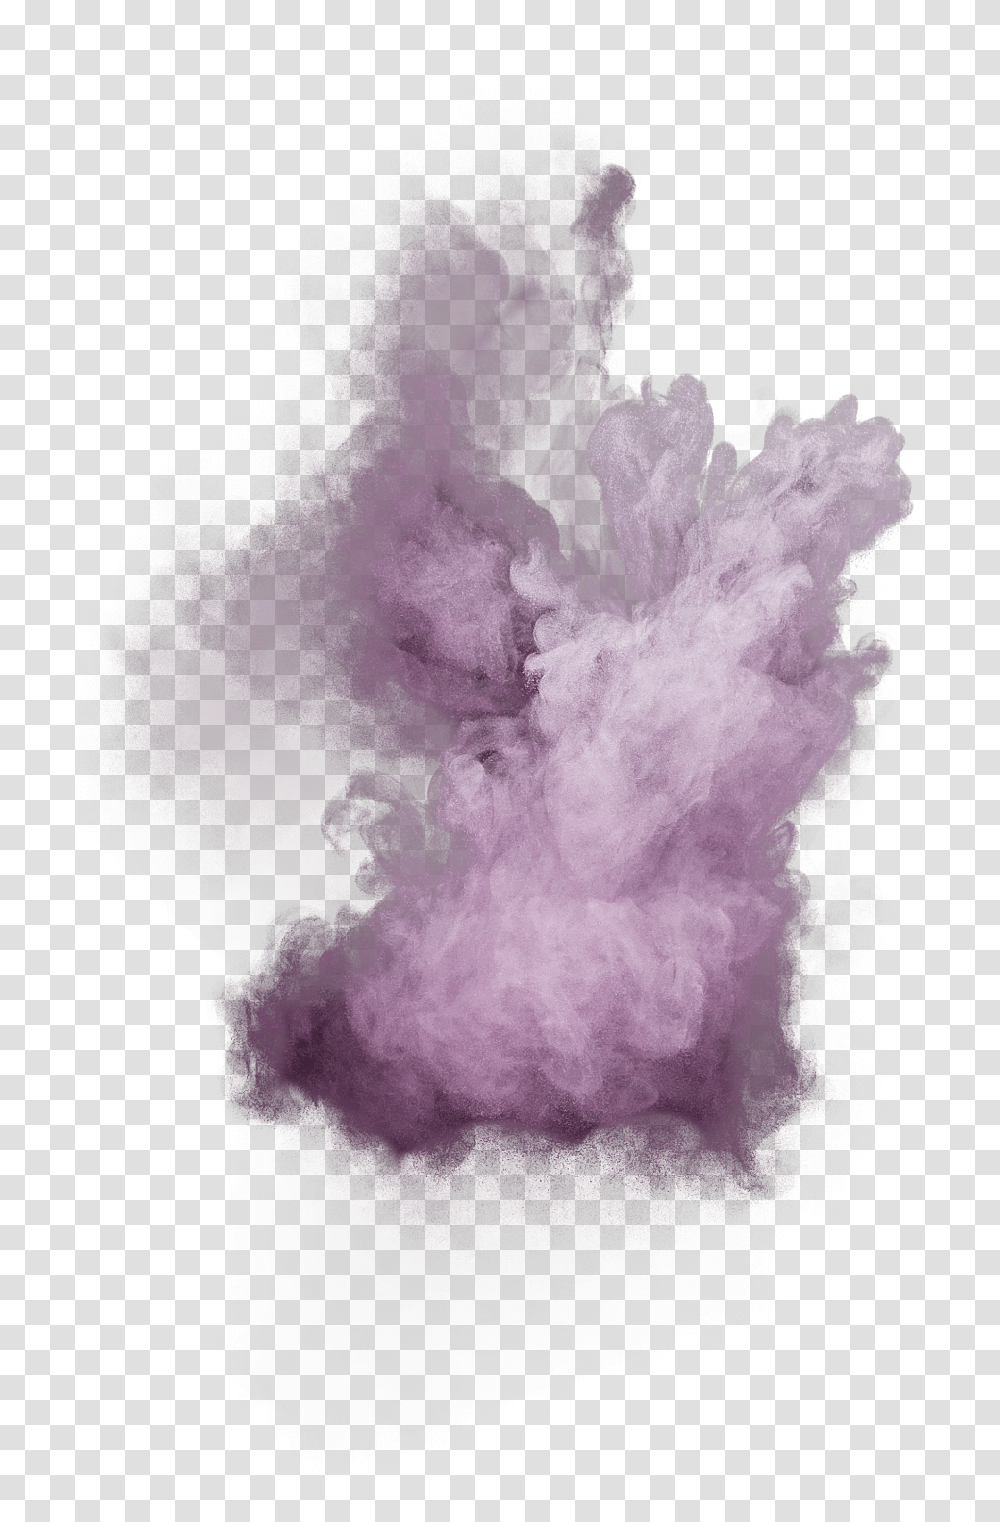 Purple Powder Explosion Image For Smoke Transparent Png